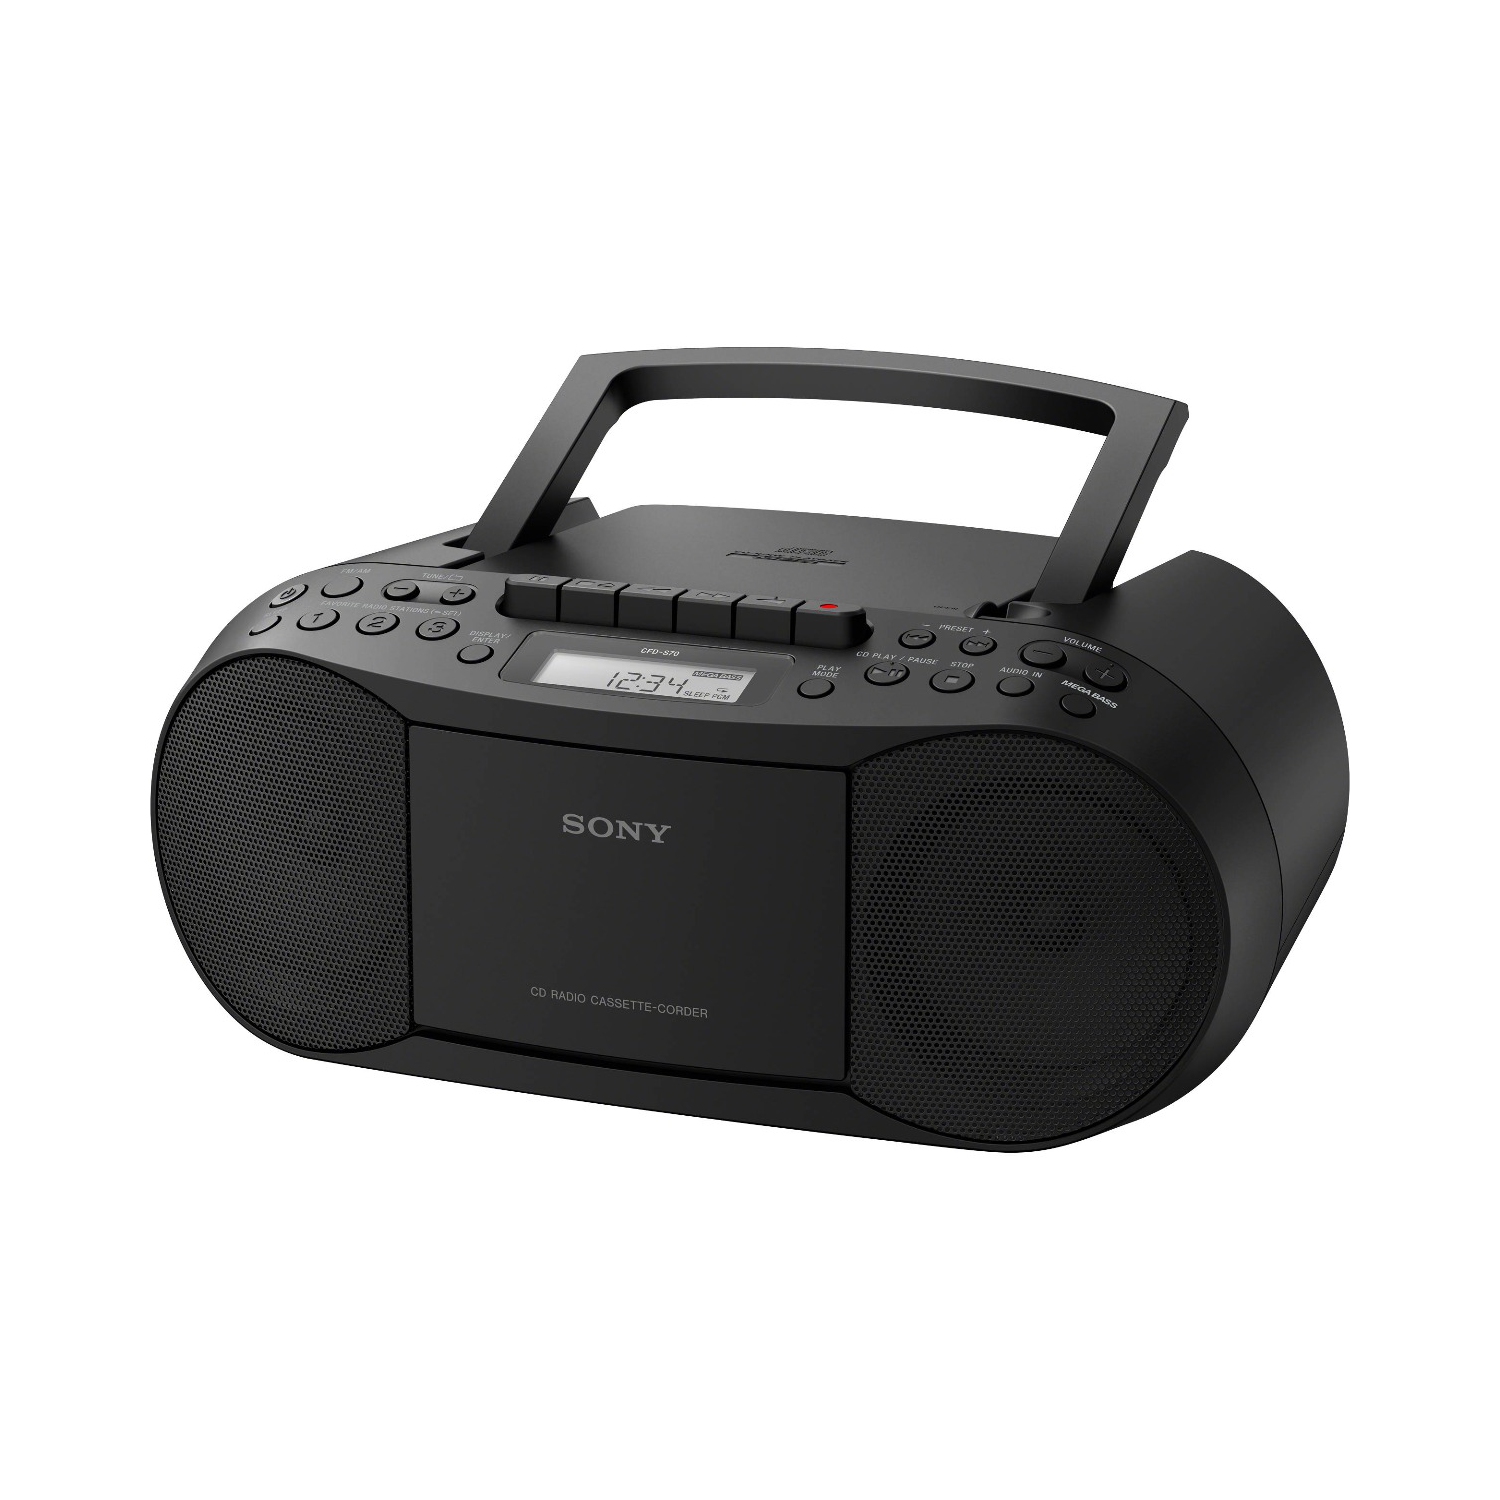 Sony CFD-S70 CD/Cassette Boombox Home Audio Radio - Open Box